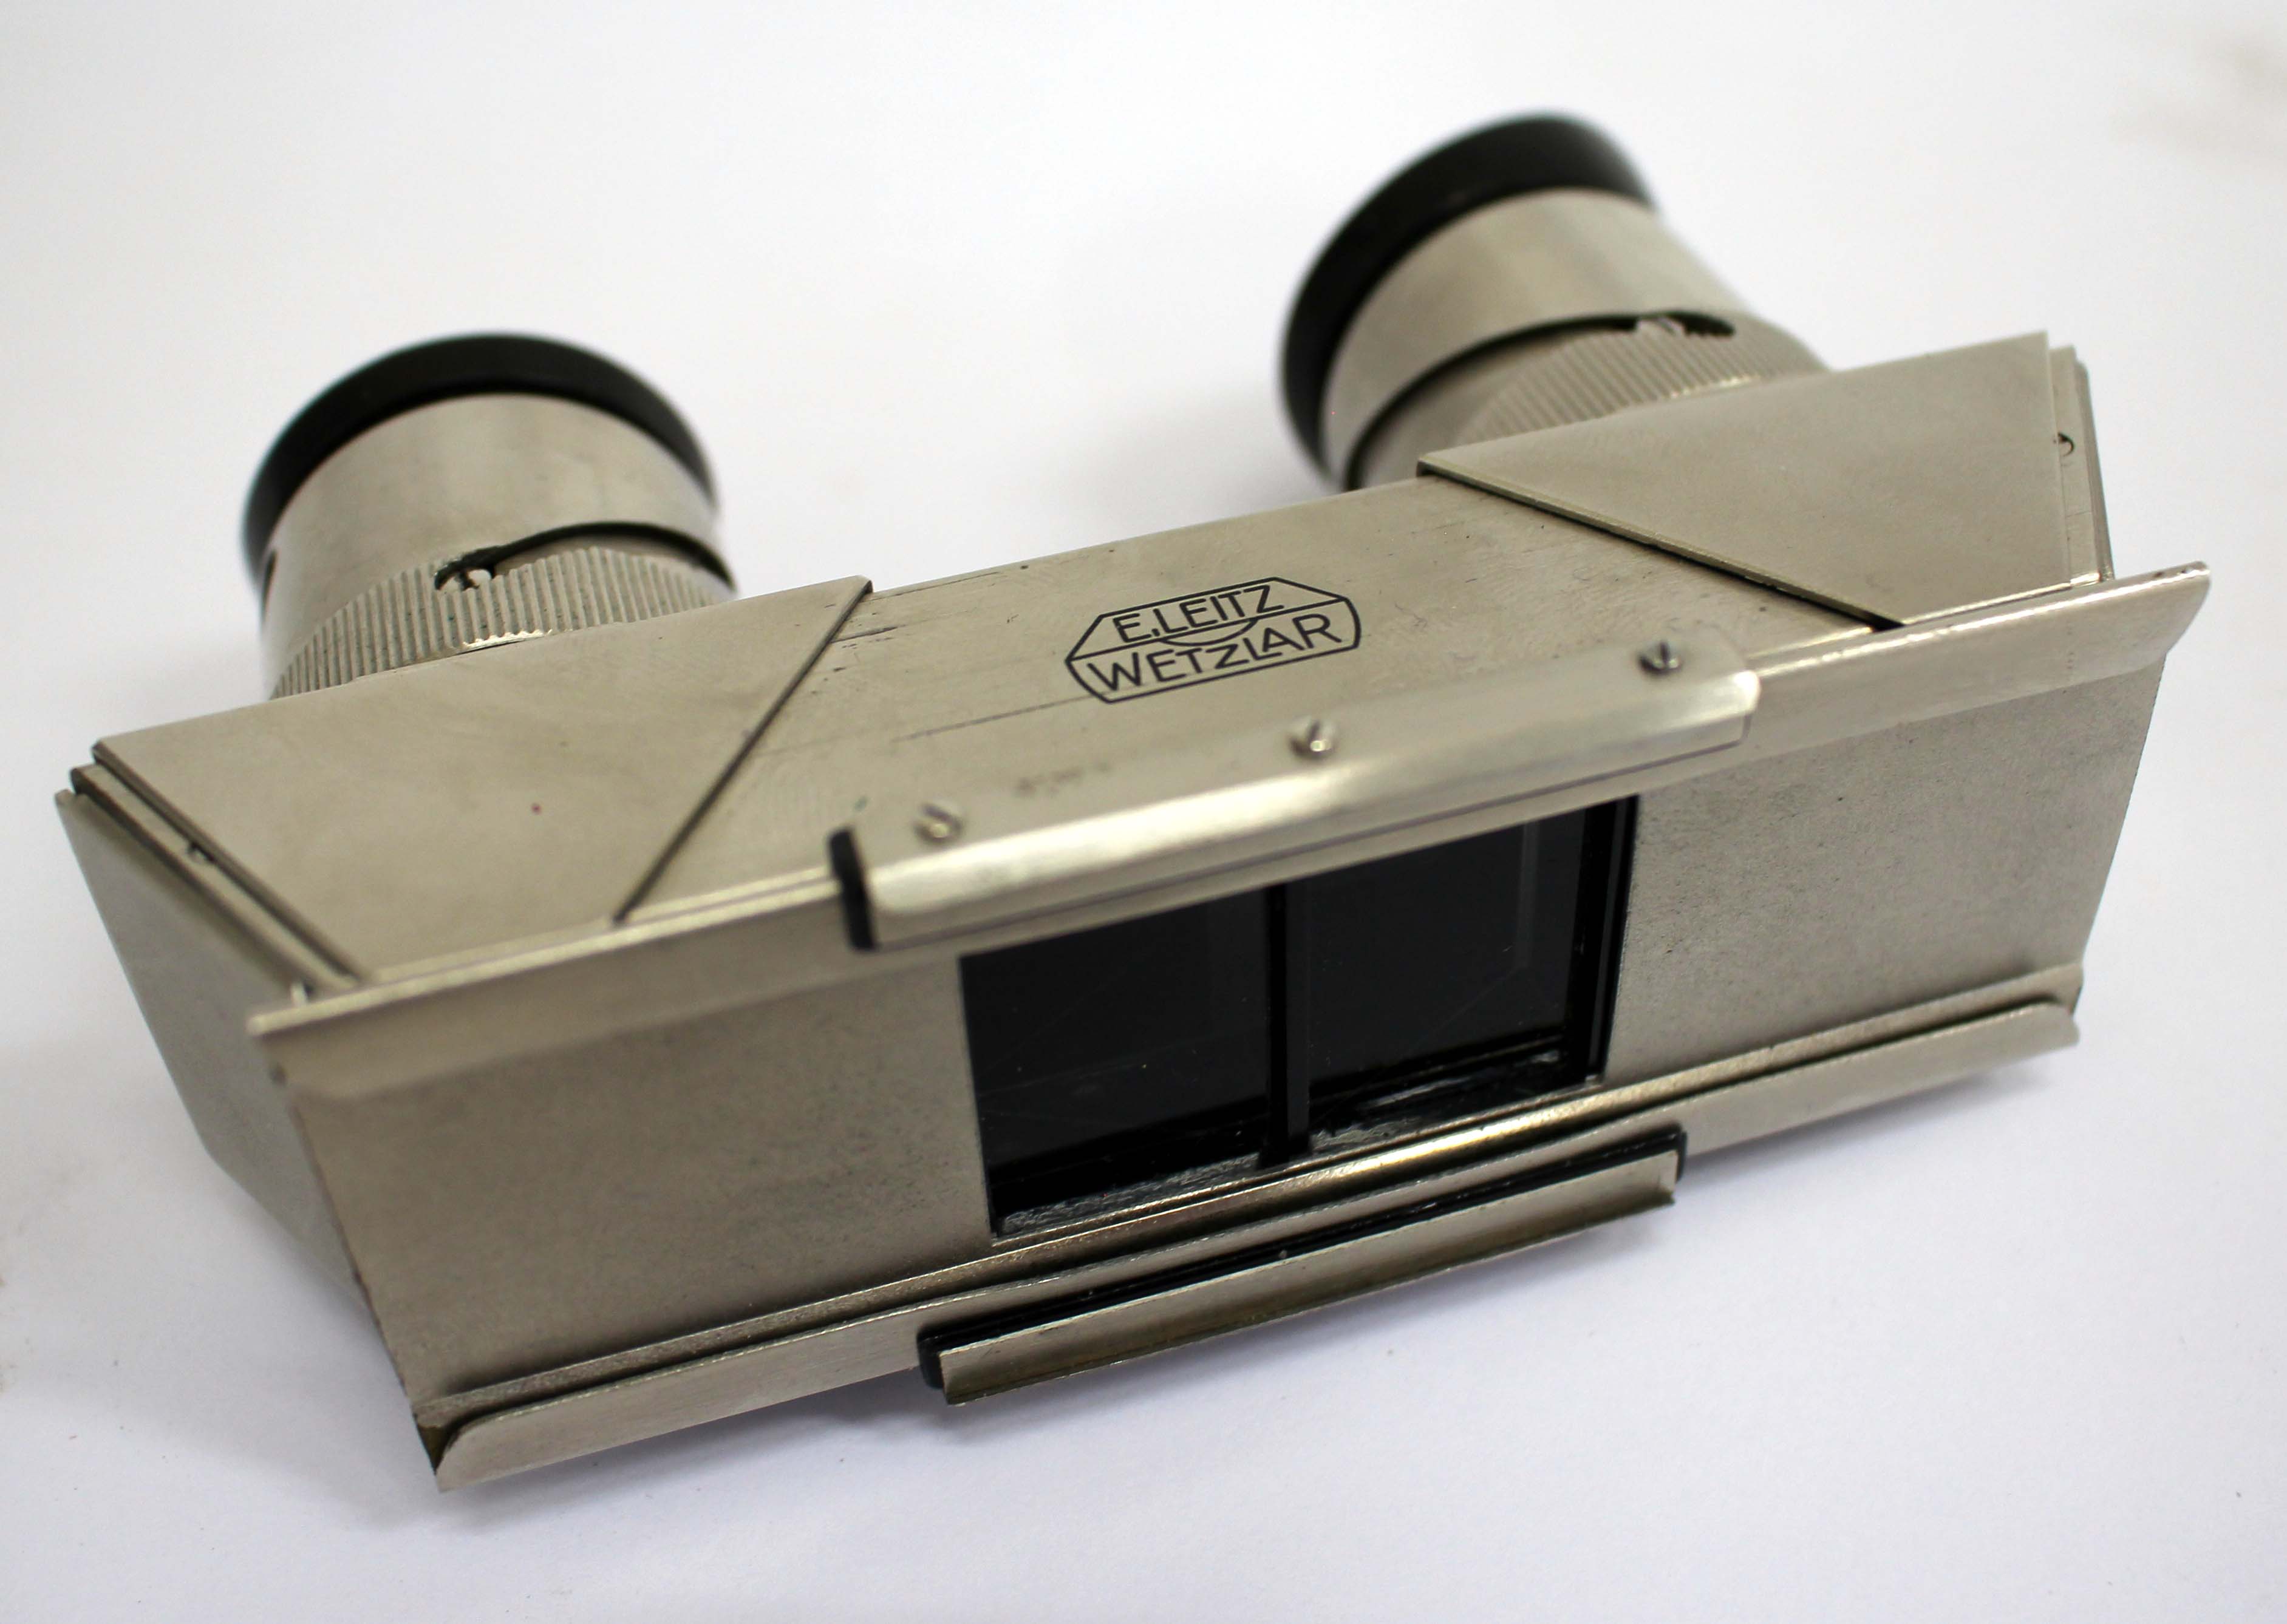 A LEITZ WETZLAR STEREOSCOPIC VIEWER, Stereo-Betrachtungsapparat, 12cm wide in a fitted velvet